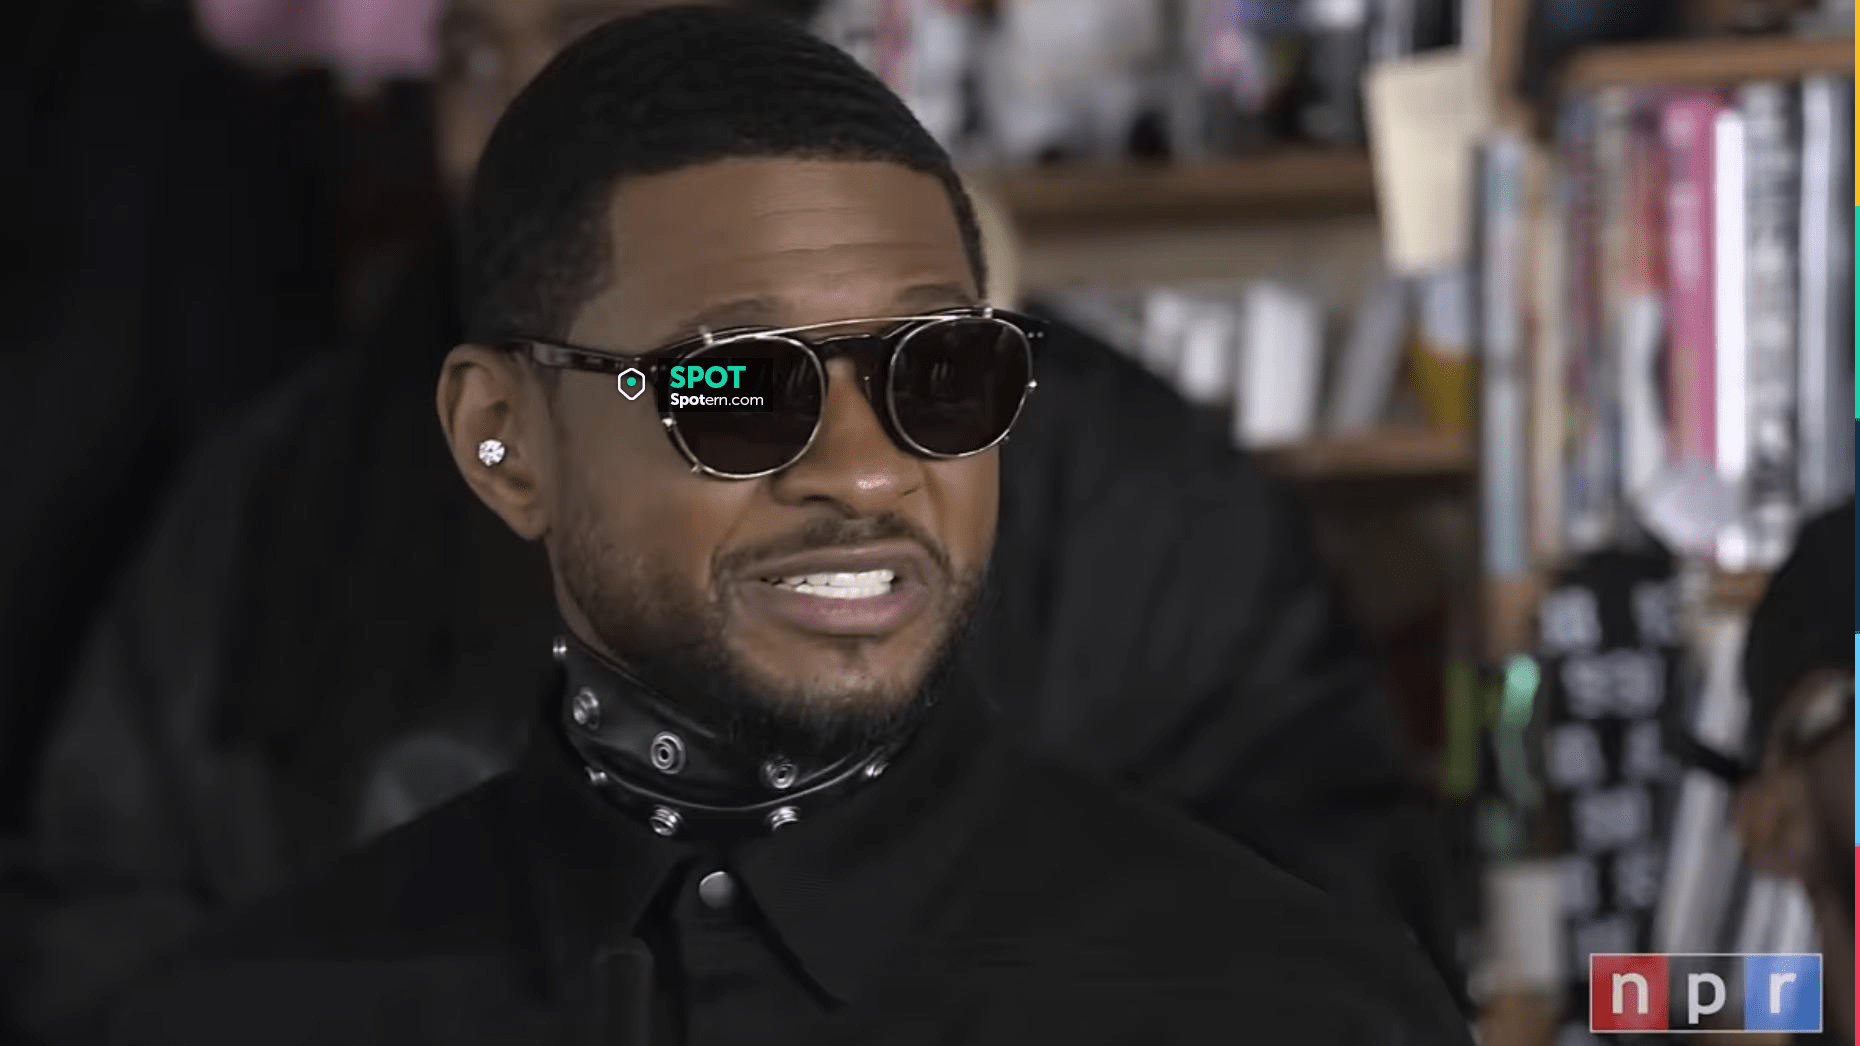 Celine sunglasses worn by Usher at NPR Music Tiny Desk Concerts | Spotern